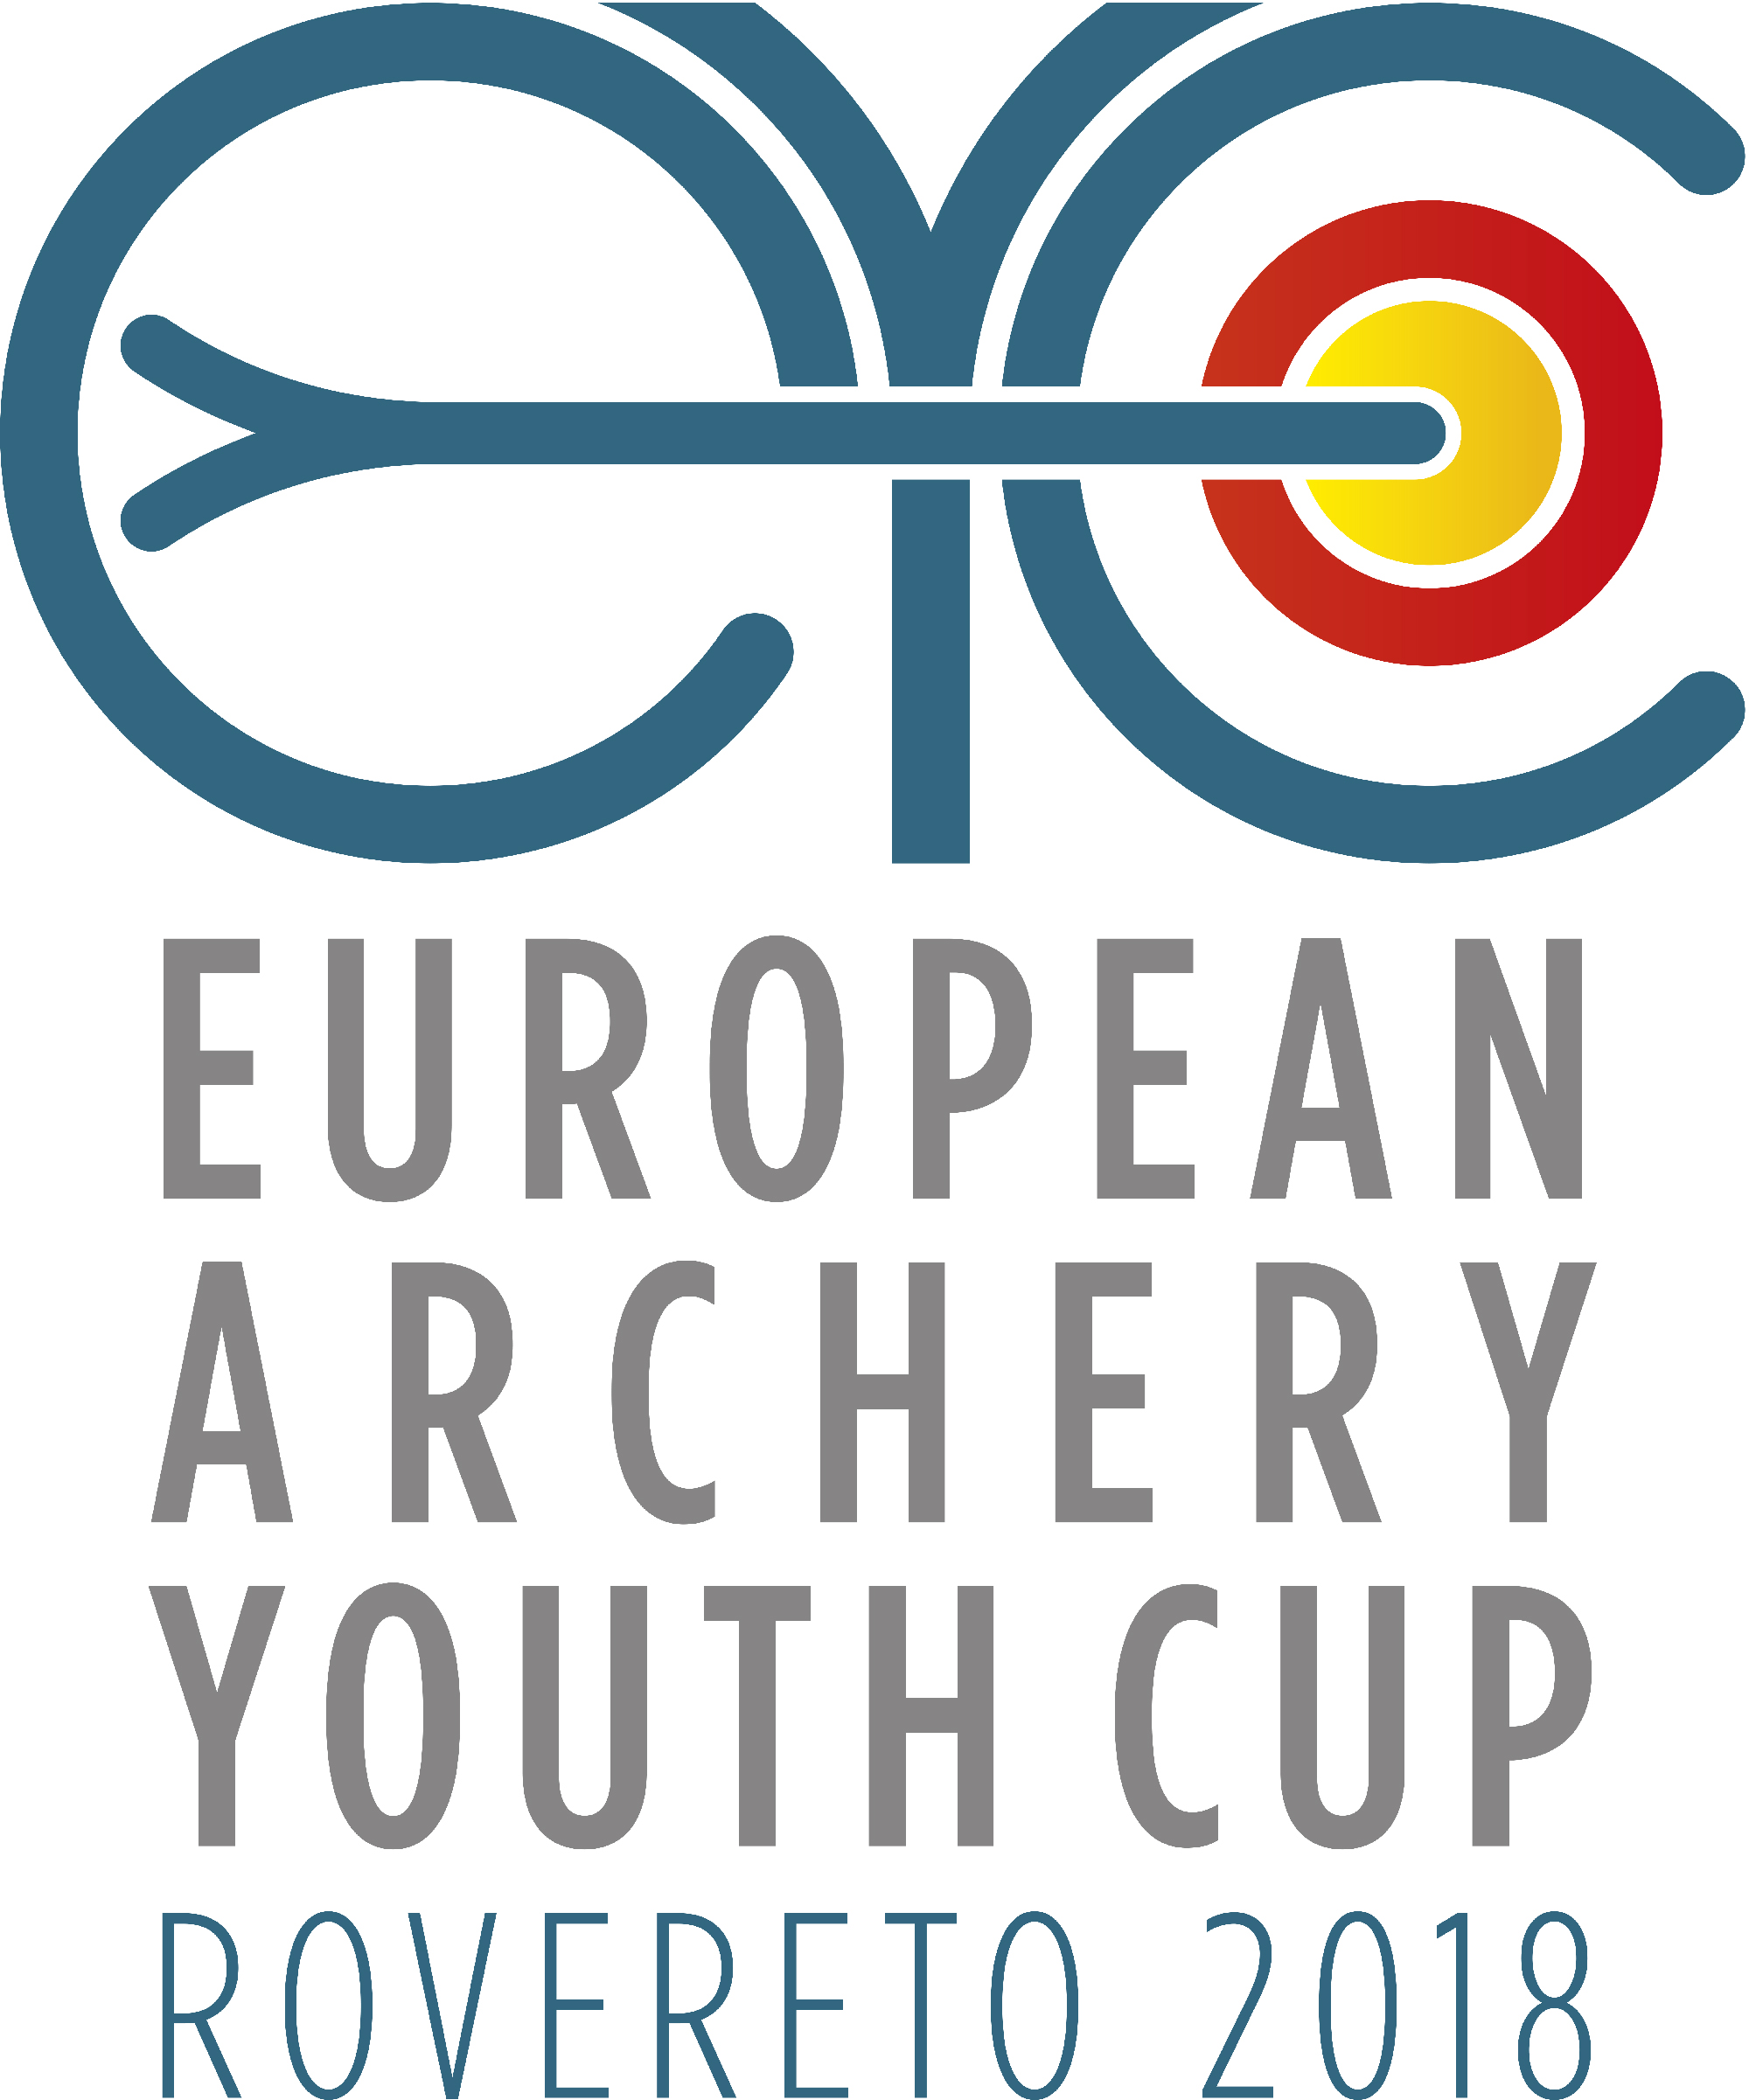 European Archery Youth Cup - 1st Leg